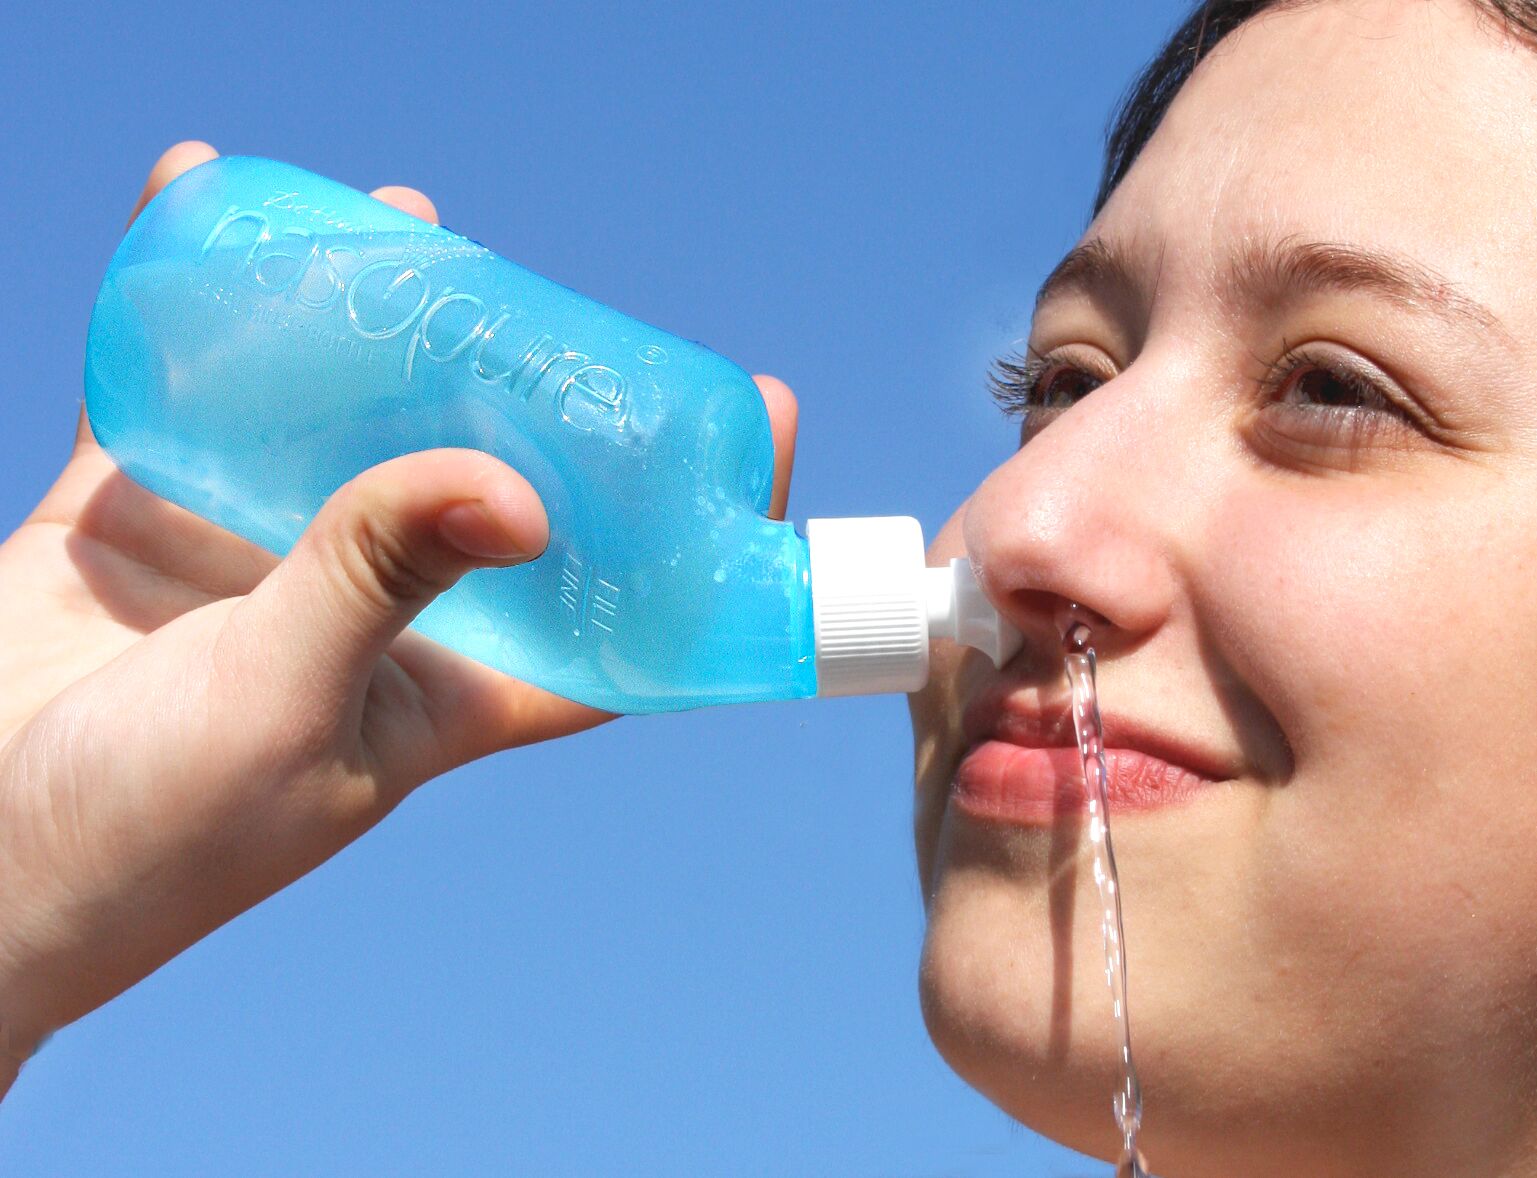 Промывание носа 0. Промывание носа. Промывалка для носа. Полоскание носа. Вода для промывания носа.